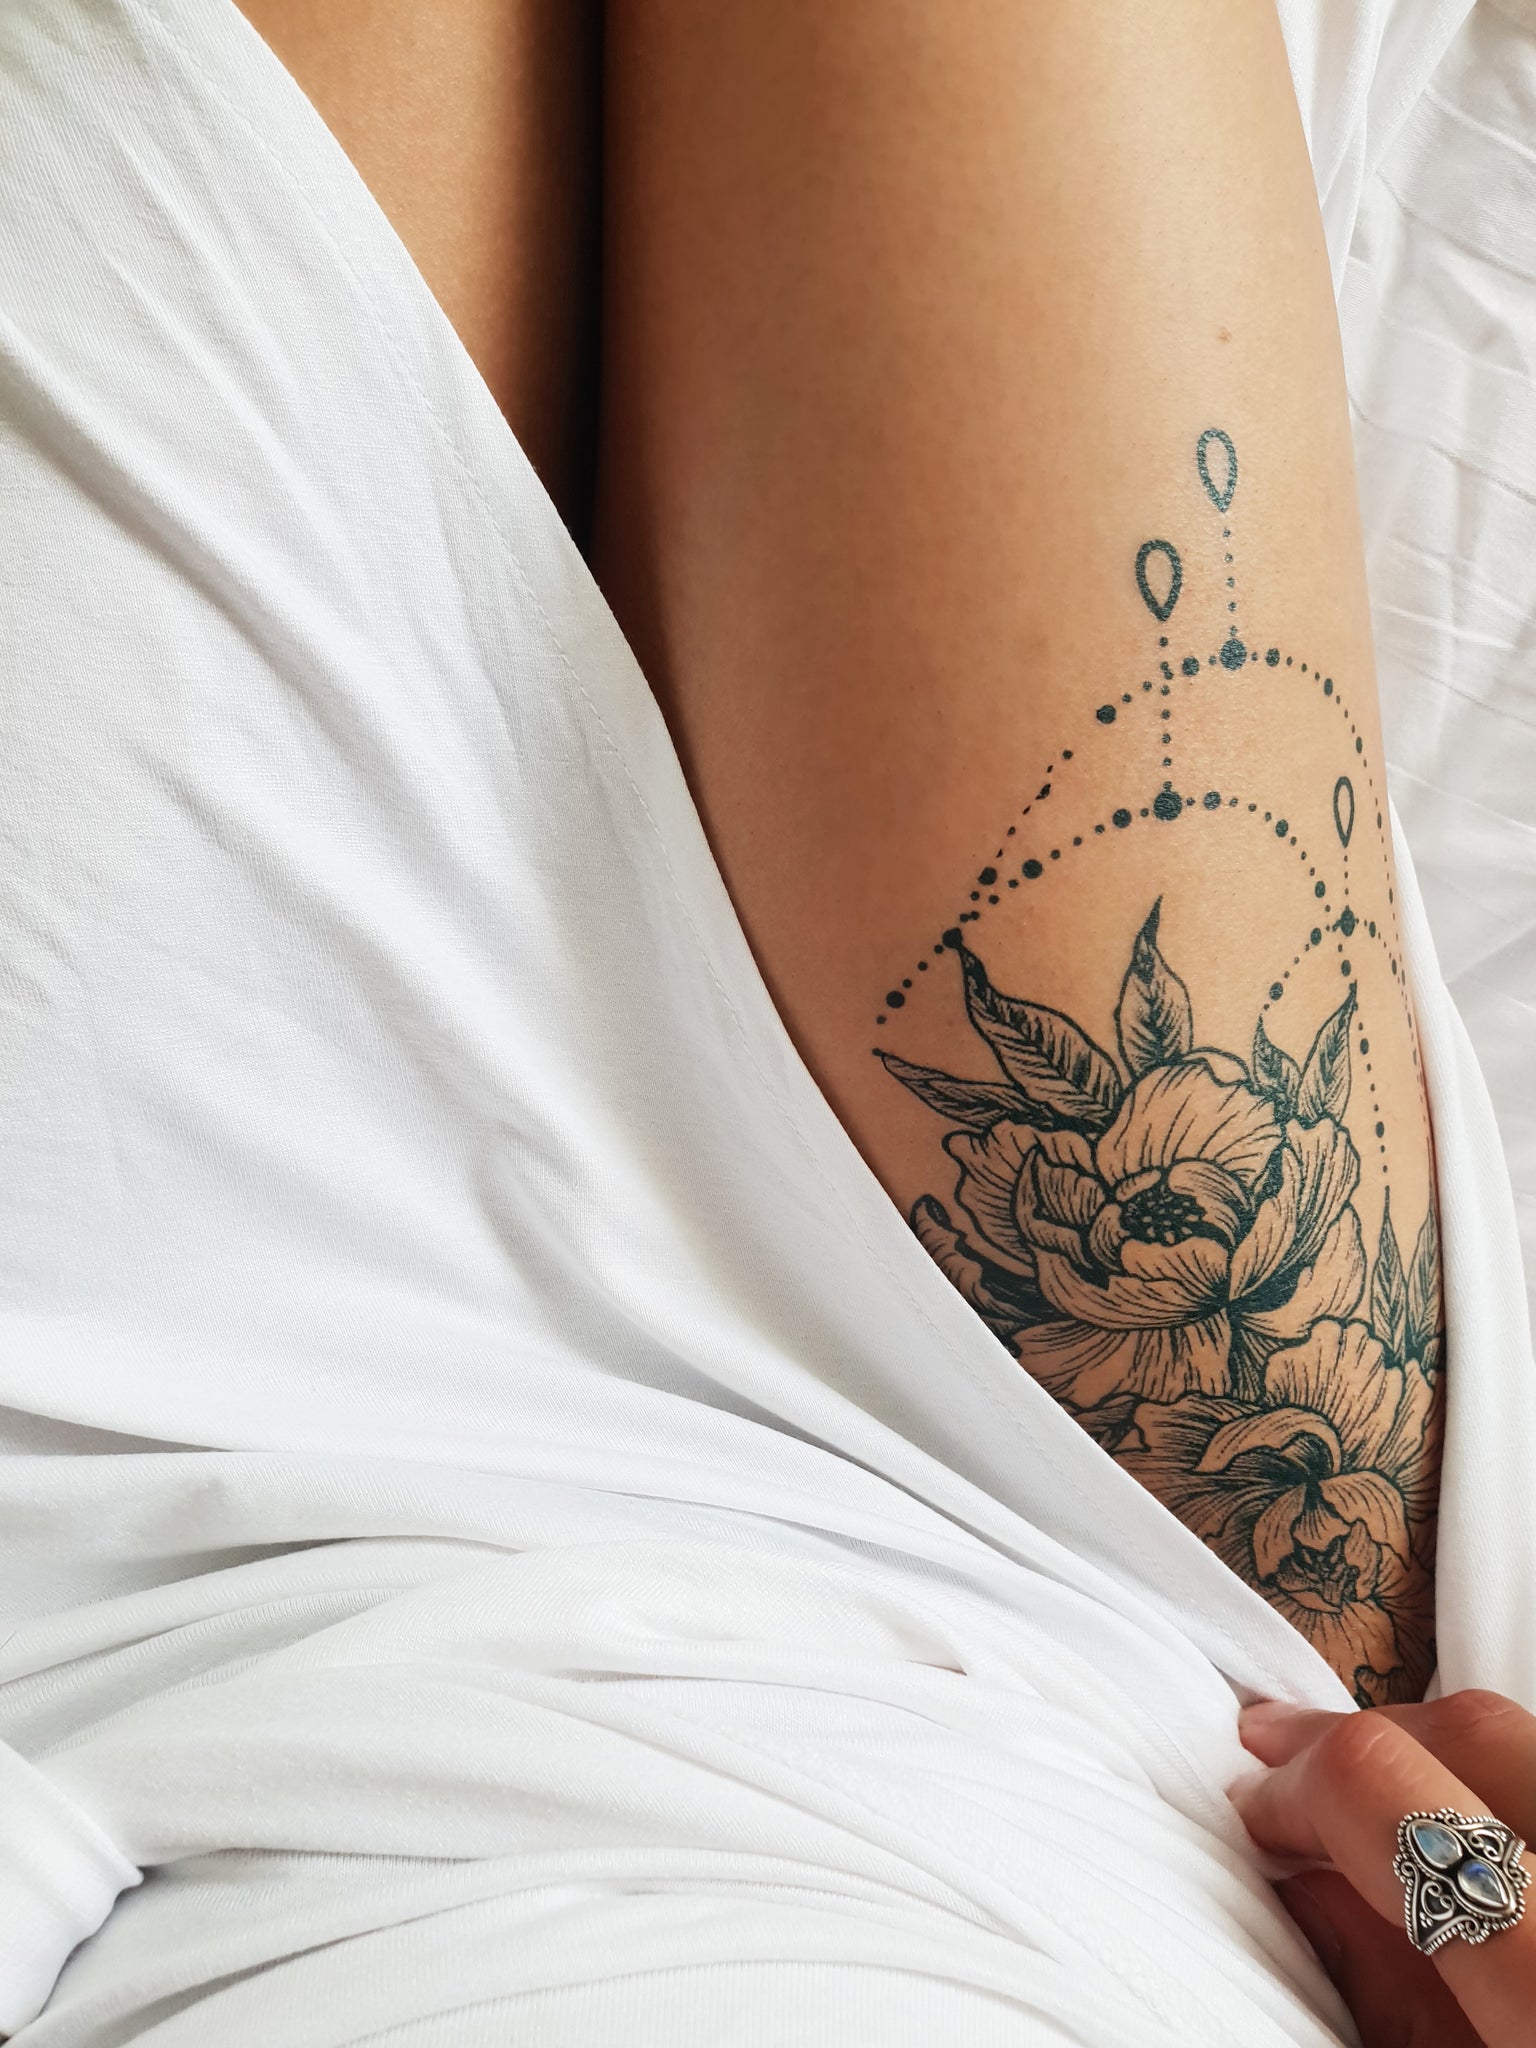 45 Cute Rose Tattoo Design Ideas  Inspired Beauty